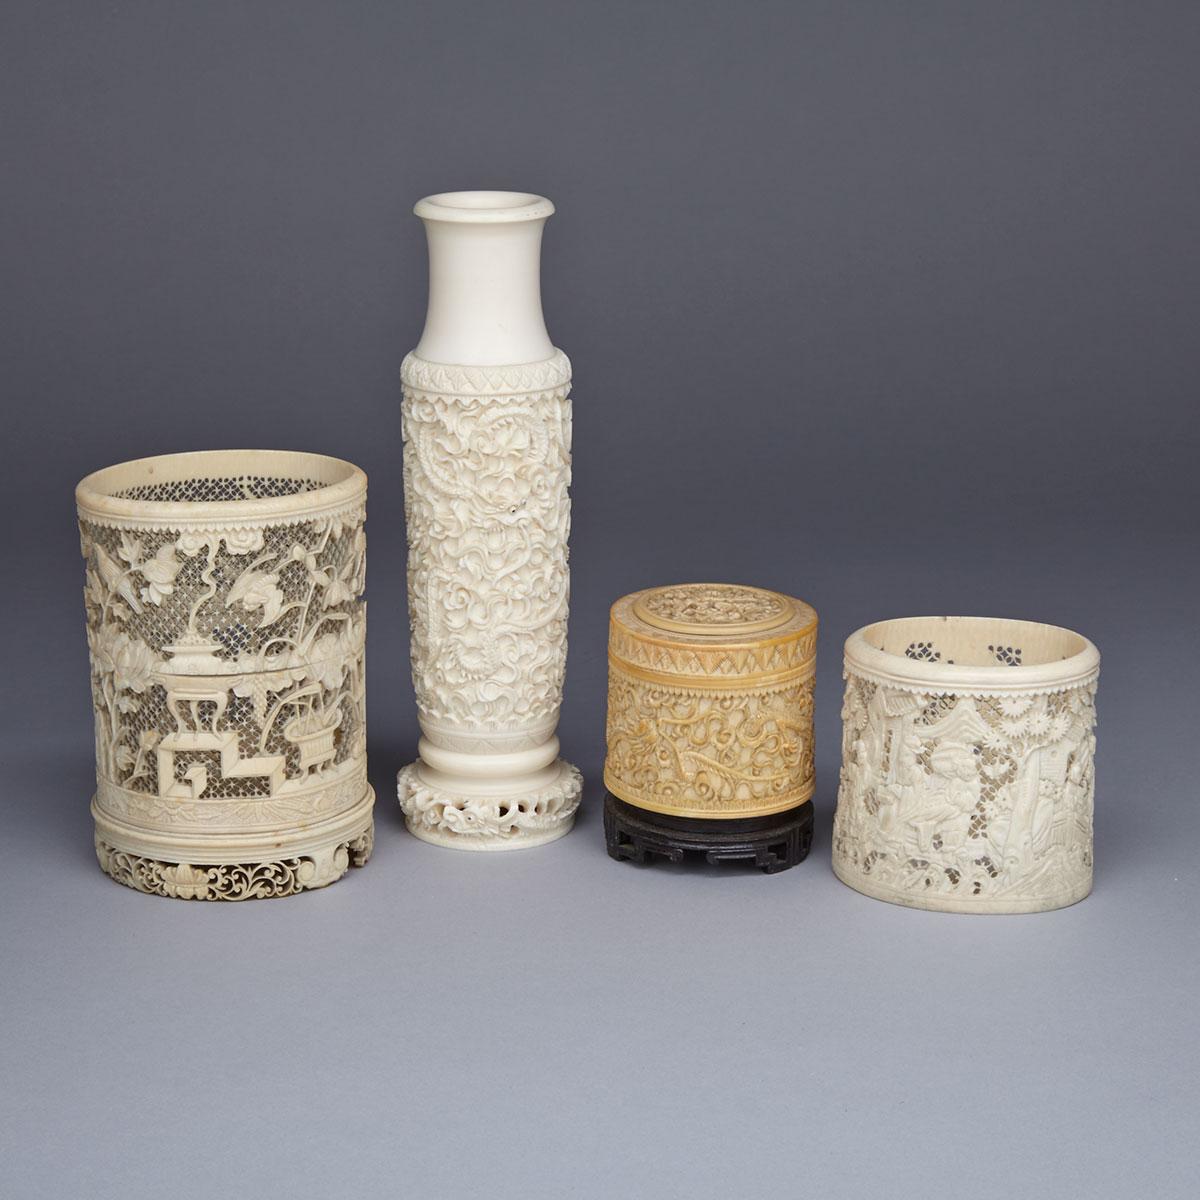 Four Ivory Carved Decorative Vases, Circa 1900-1940